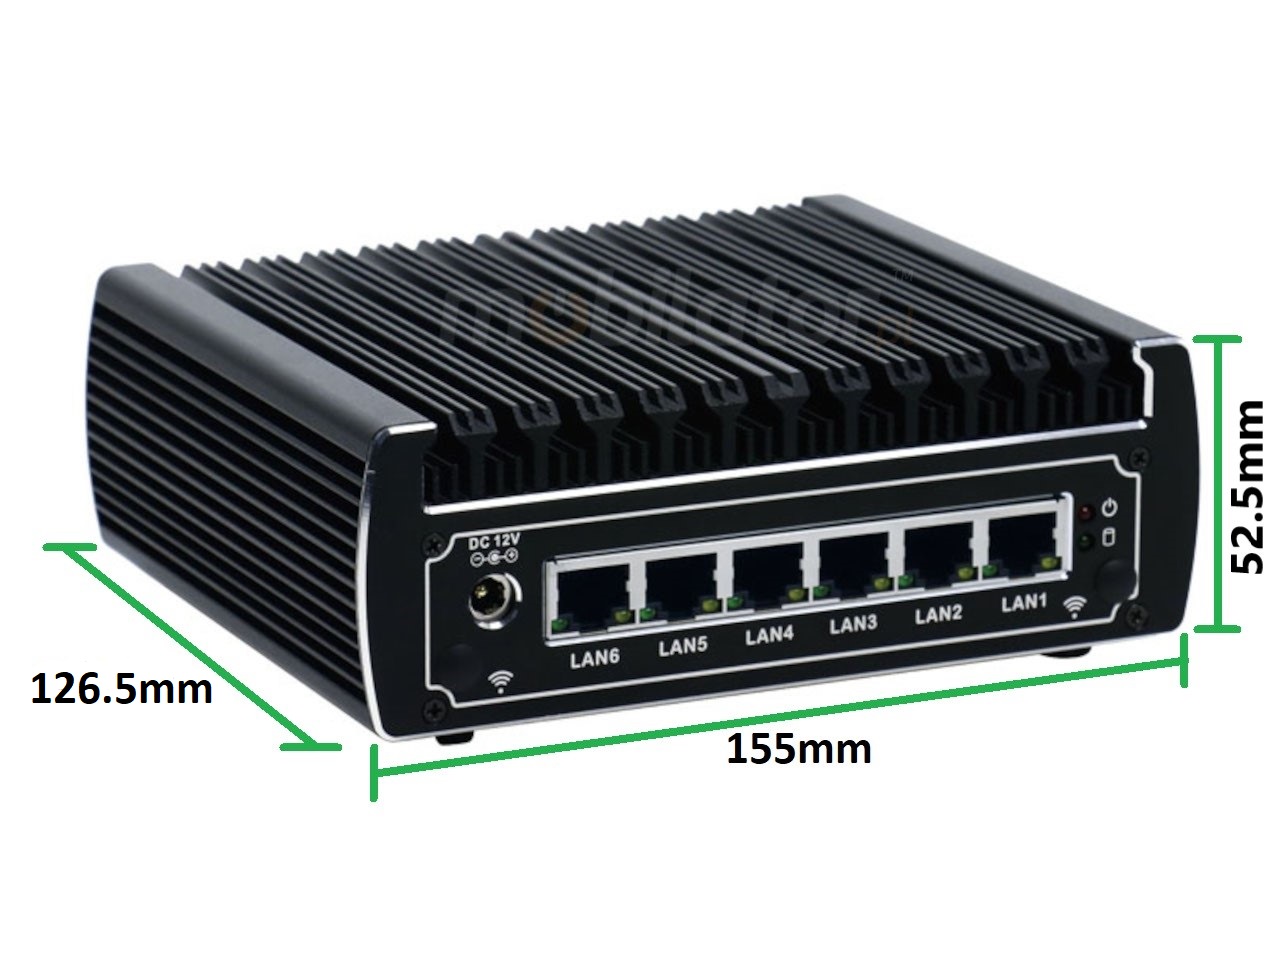   IBOX N133 v.17, wymiary HDD SSD DDR4 WIFI BLUETOOTH, przemysowy, may, szybki, niezawodny, fanless, industrial, small, LAN, INTEL i3